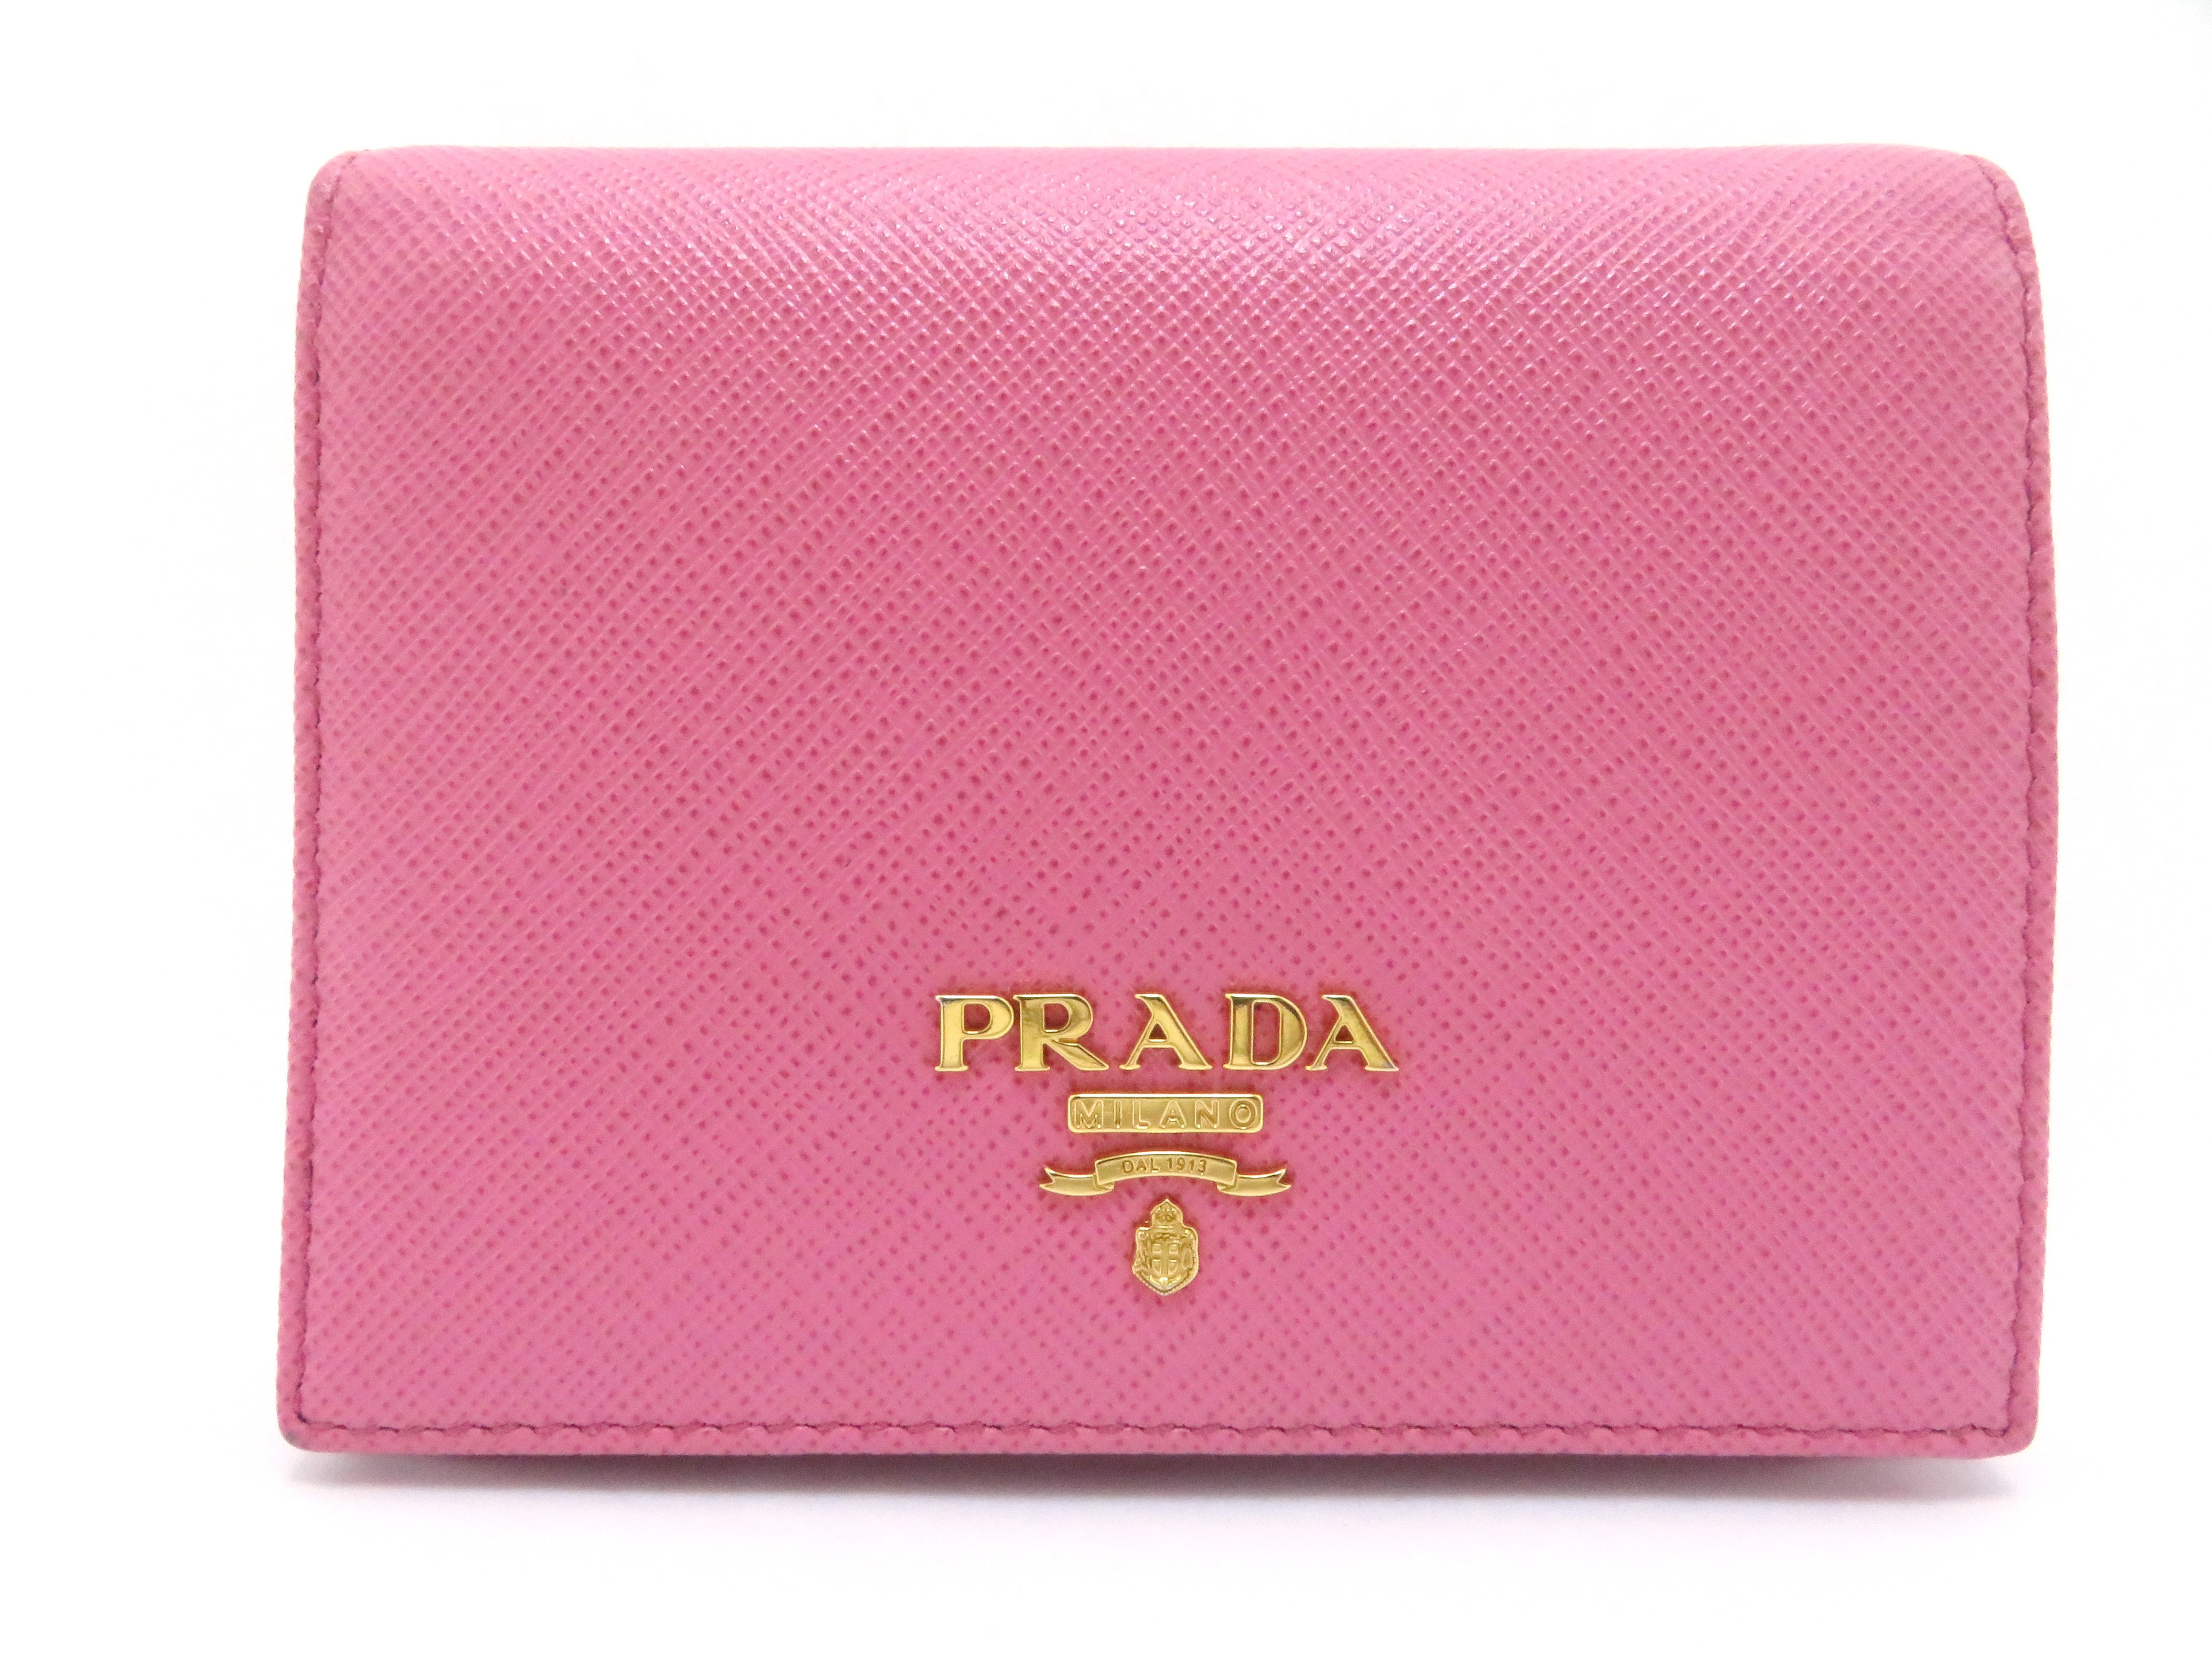 PRADA プラダ 二つ折財布 ピンク/グリーン サフィアーノ 【205】 の